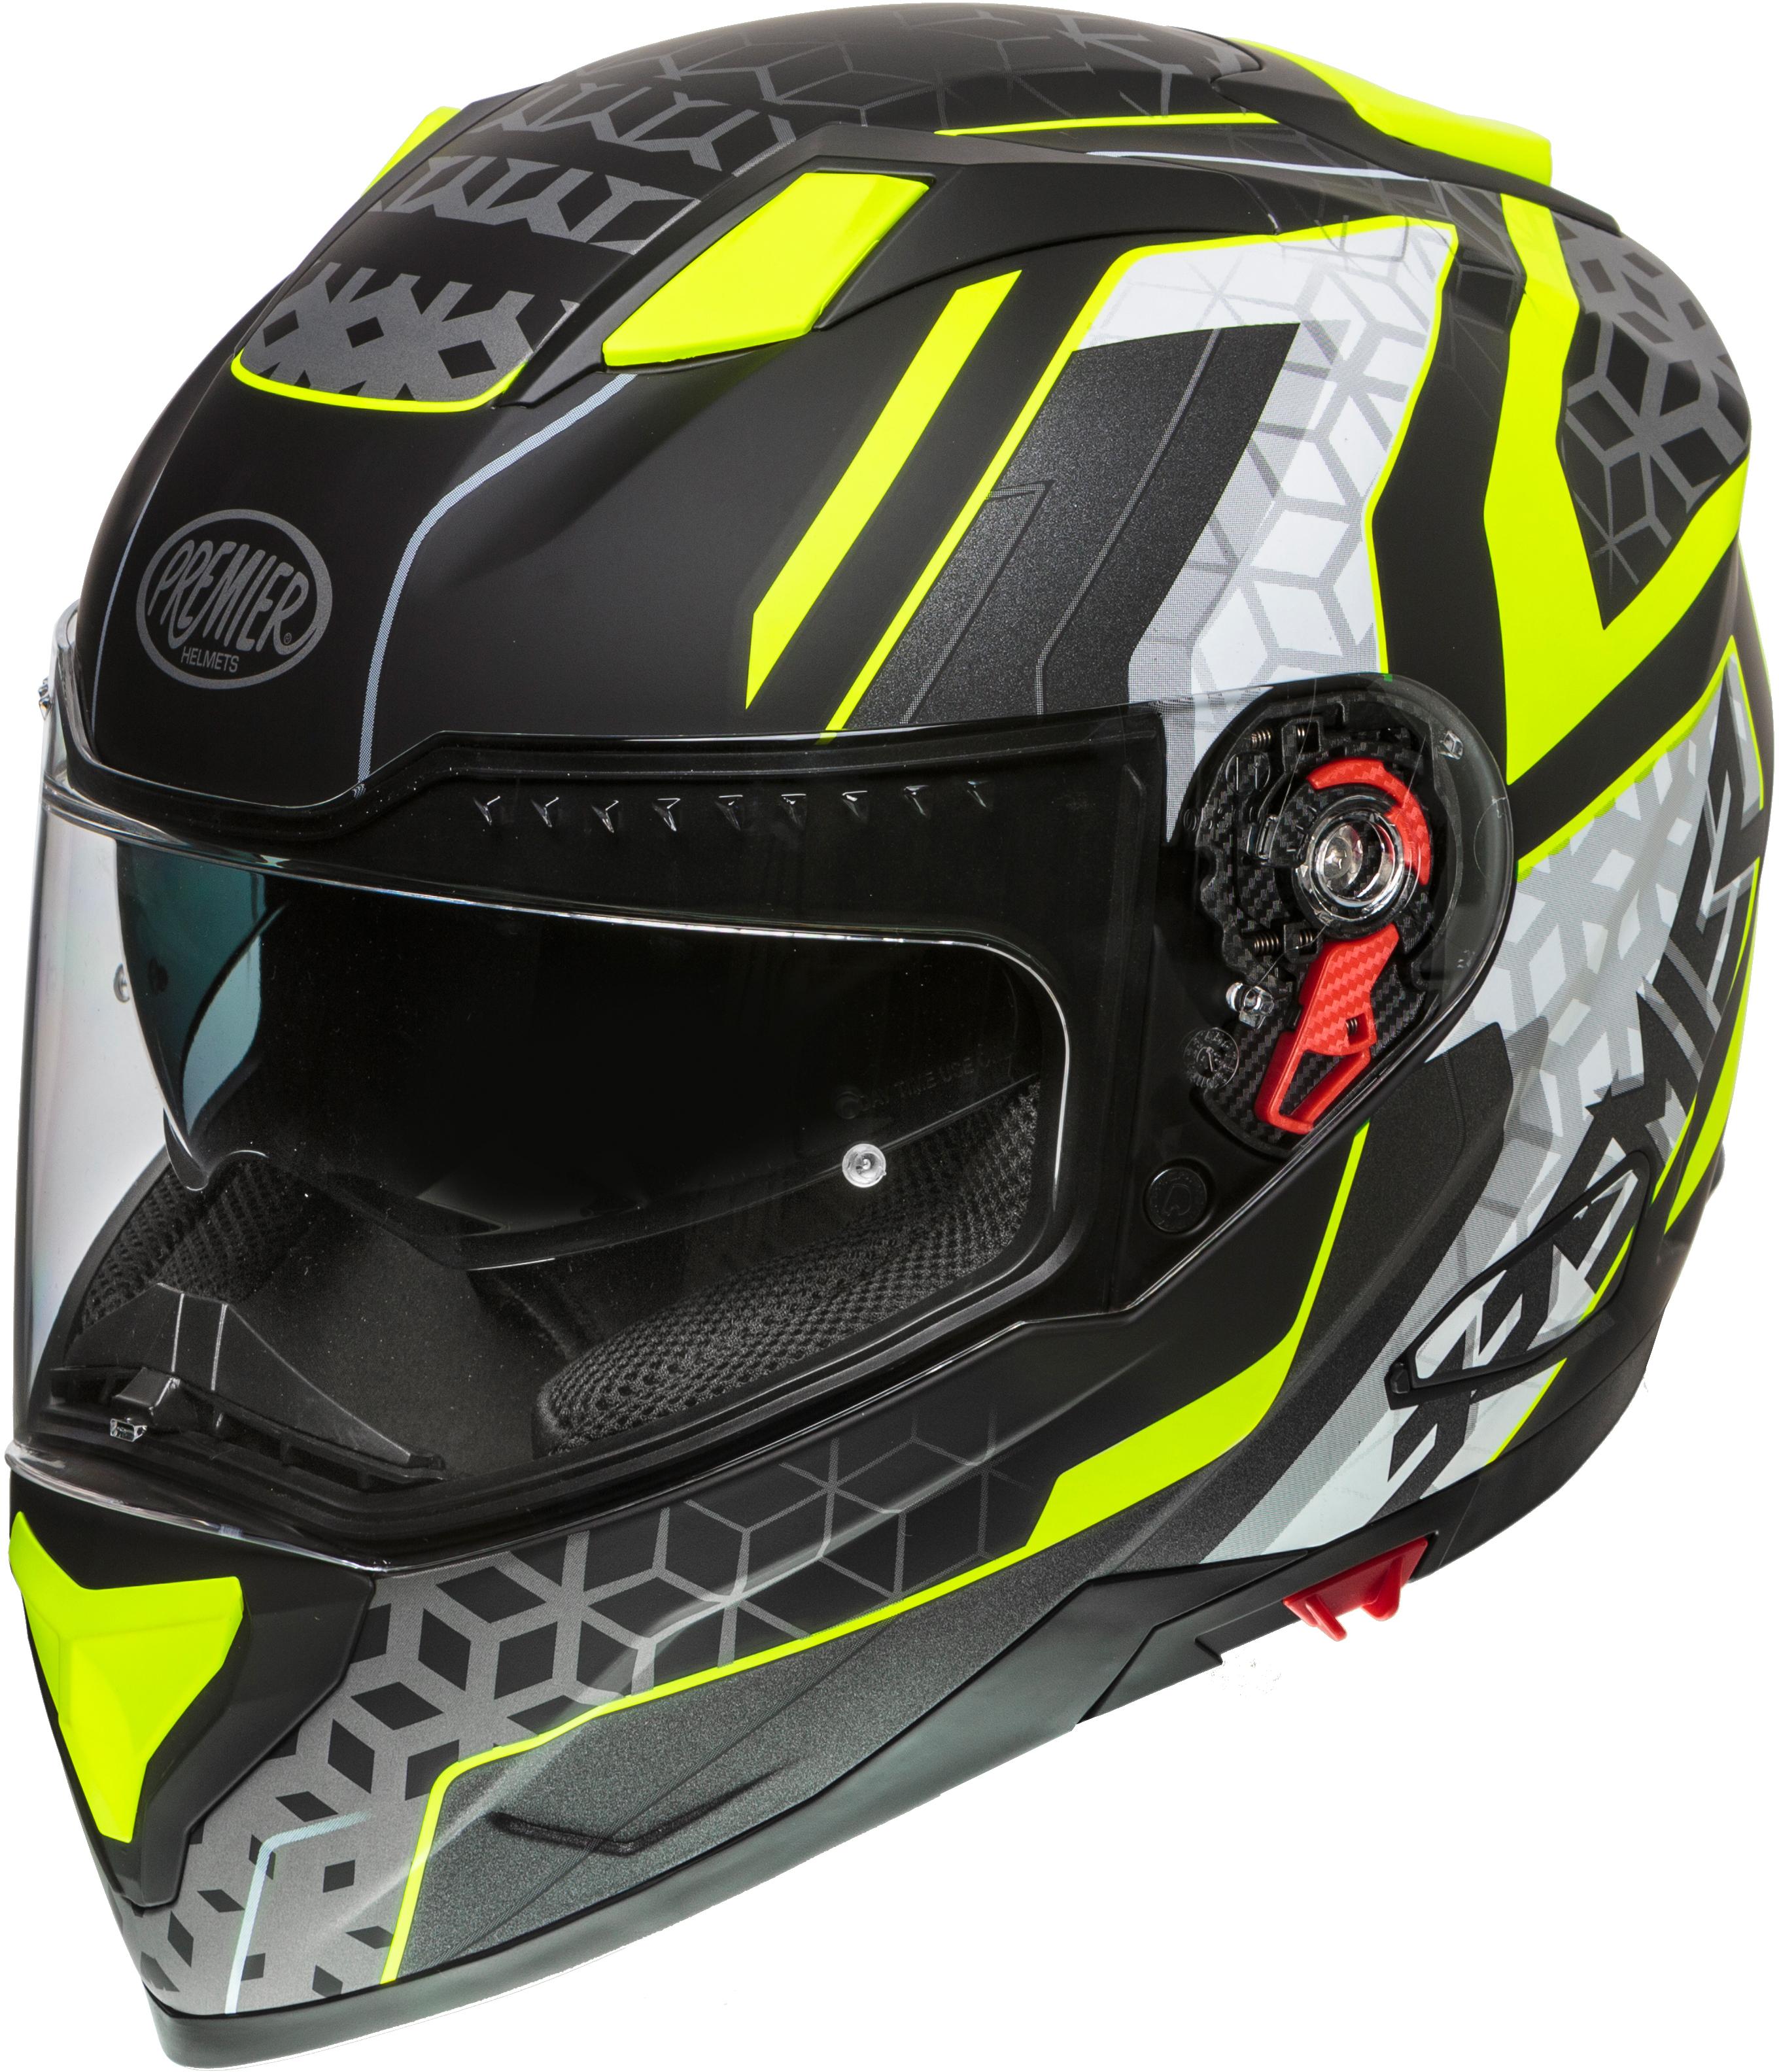 Premier Vyrus Helmet Black/Neon Extra Large